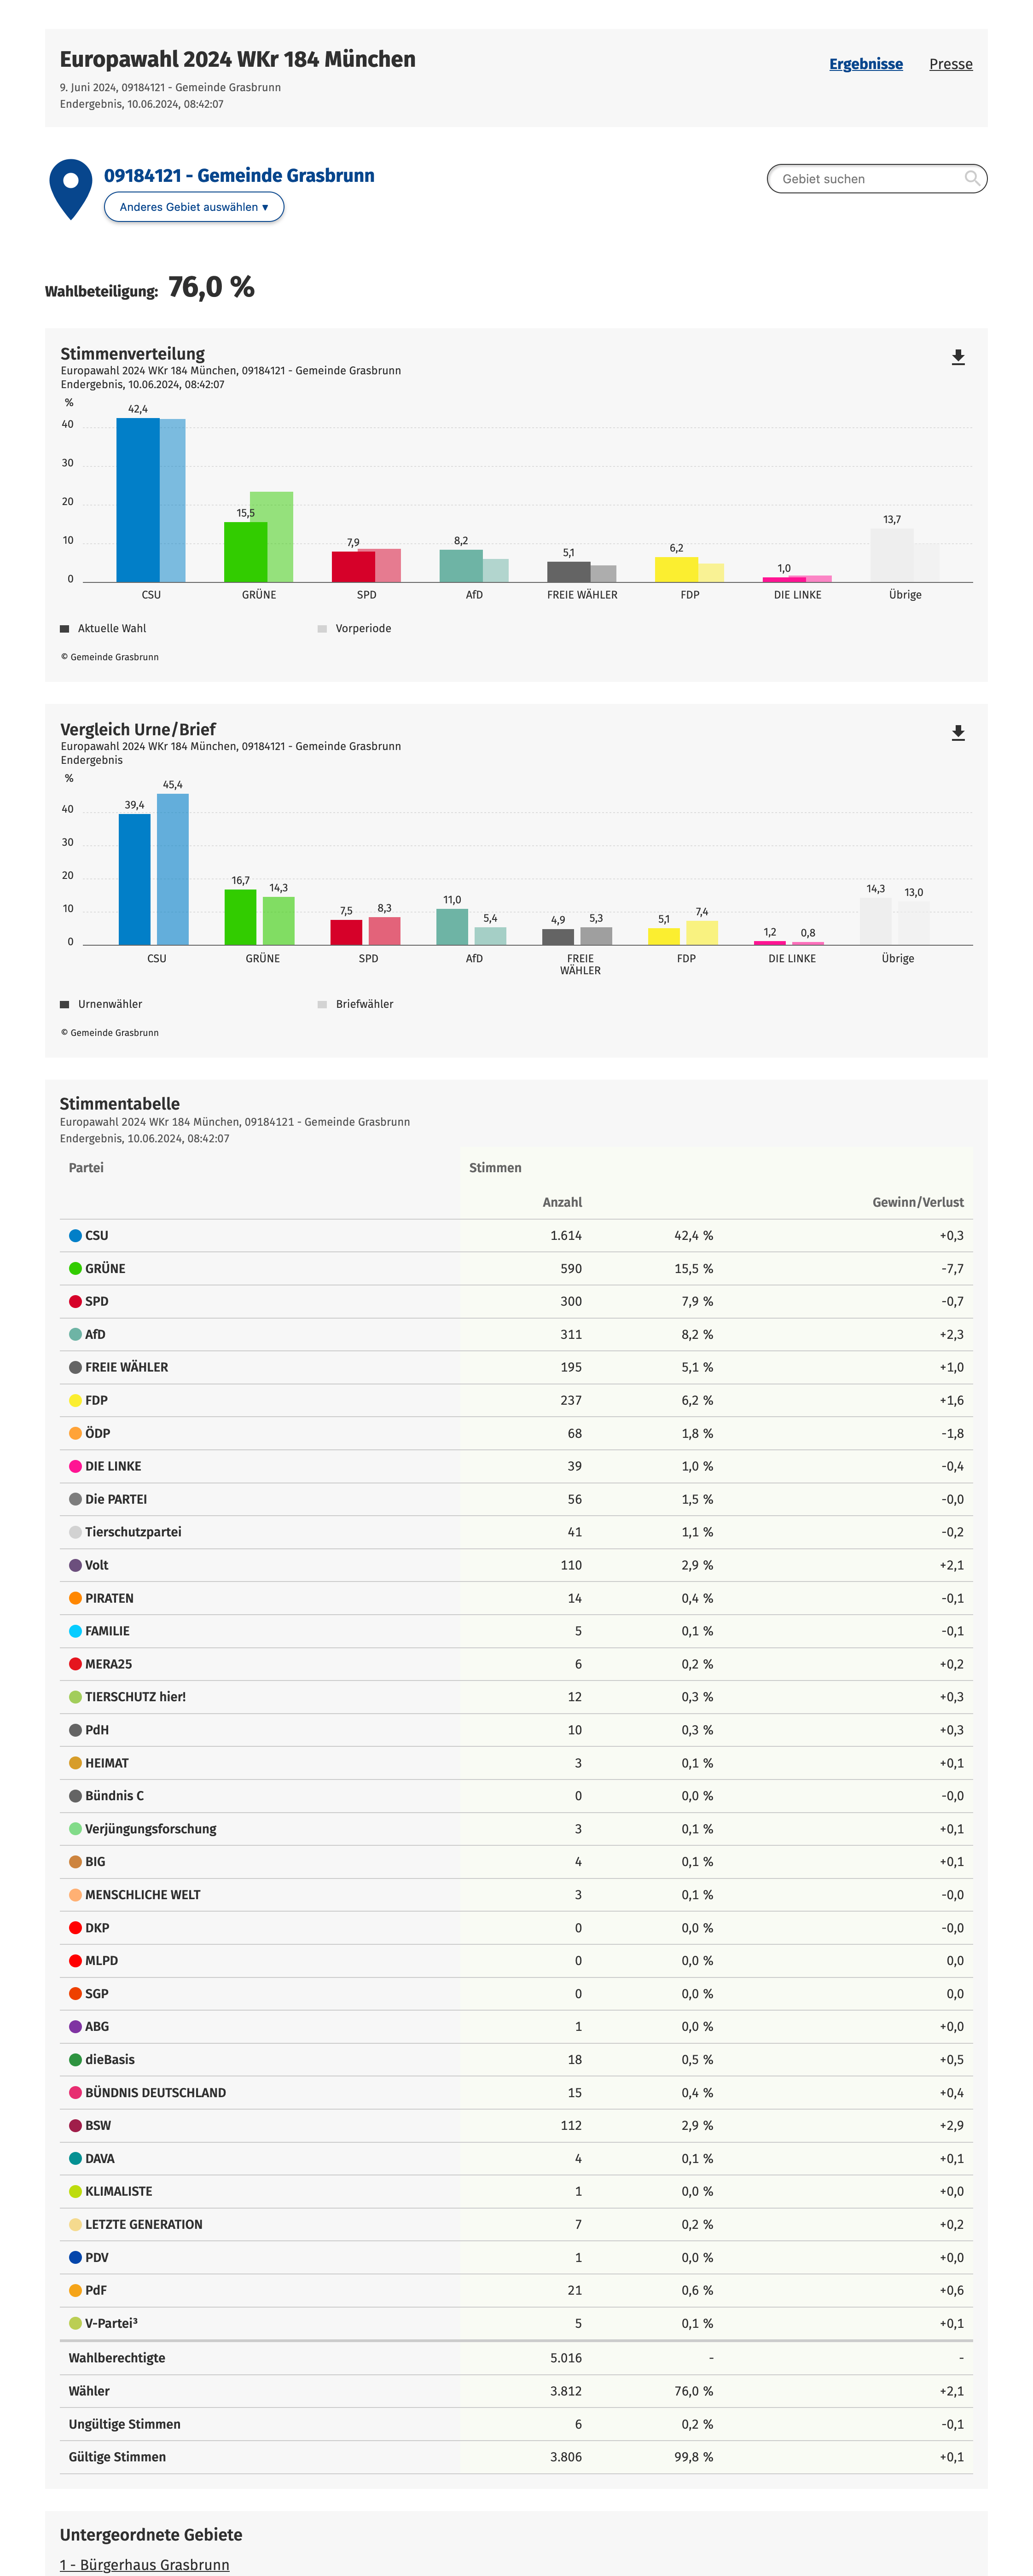 Europawahl 2024 Ergebnisse Grasbrunn